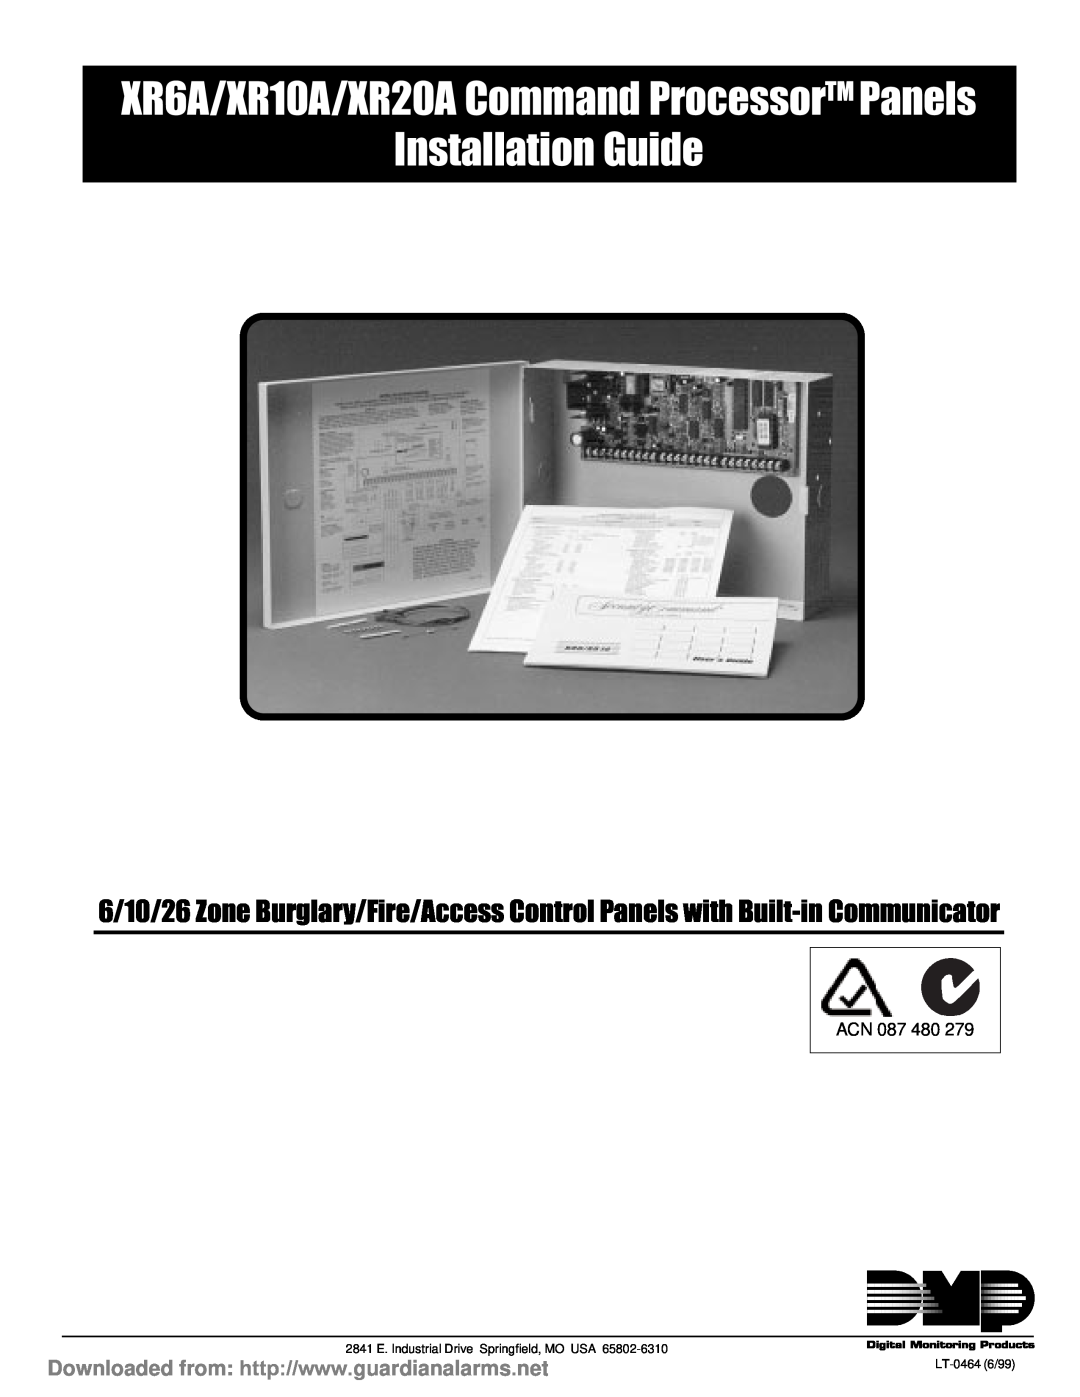 DMP Electronics manual Installation Guide, XR6A/XR10A/XR20A Command ProcessorTM Panels, LT-04646/99 